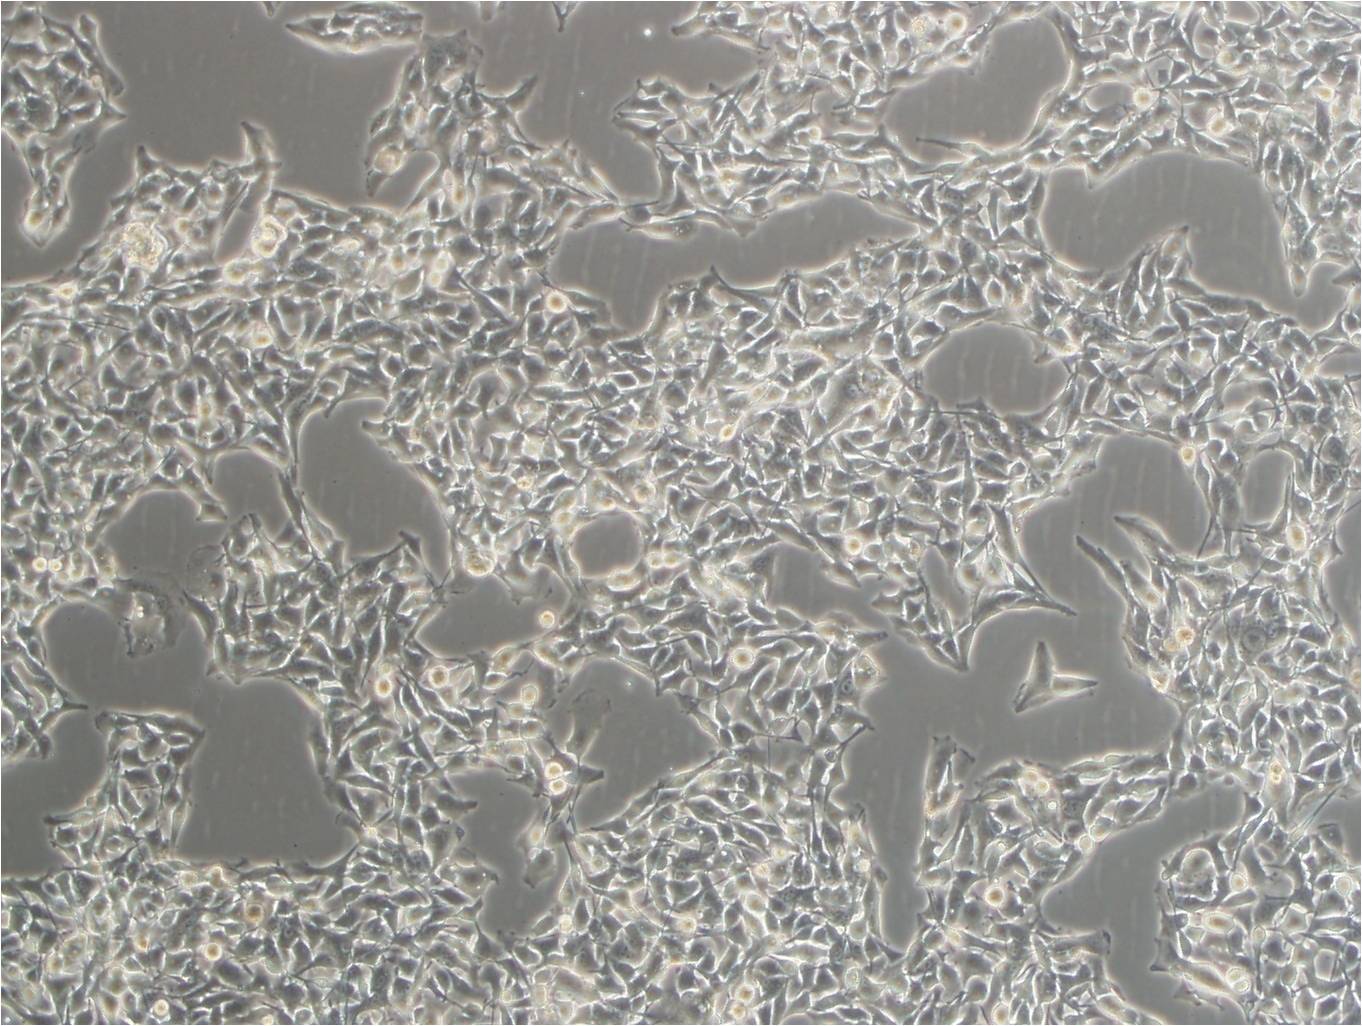 NCI-H1734 cell line人非小细胞肺癌细胞系,NCI-H1734 cell line